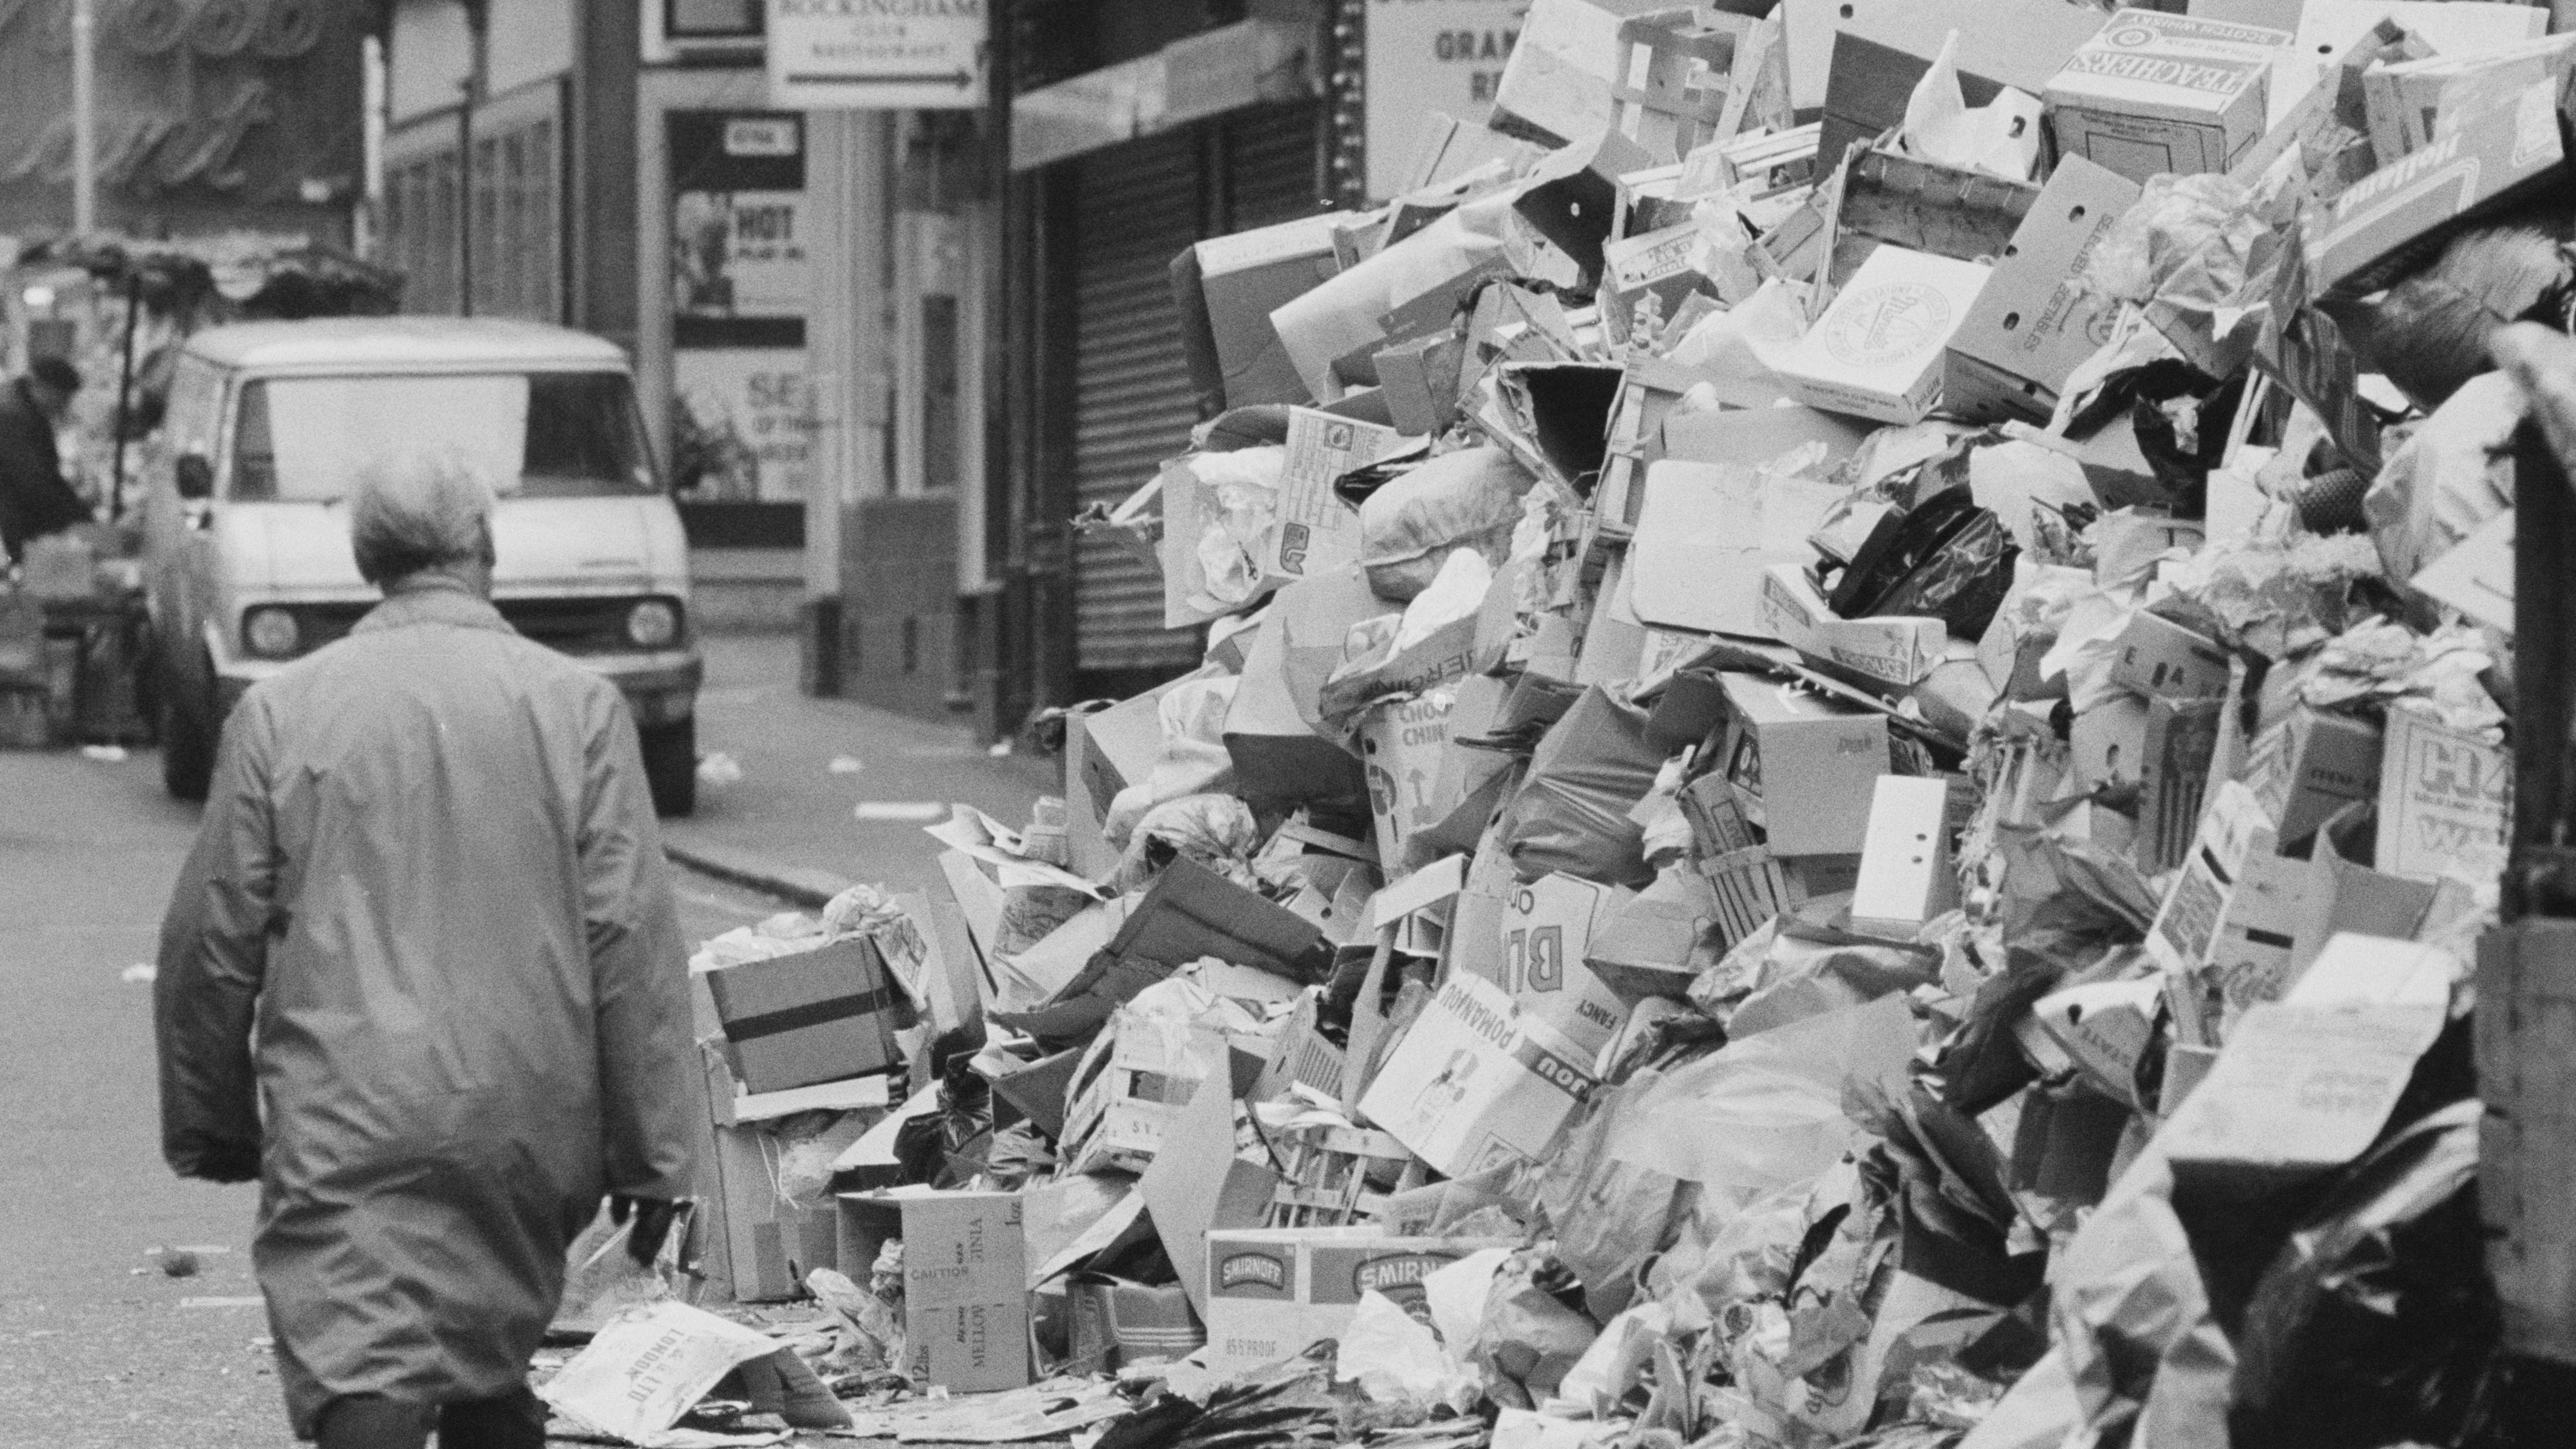 Waste collectors’ strike in London in 1979